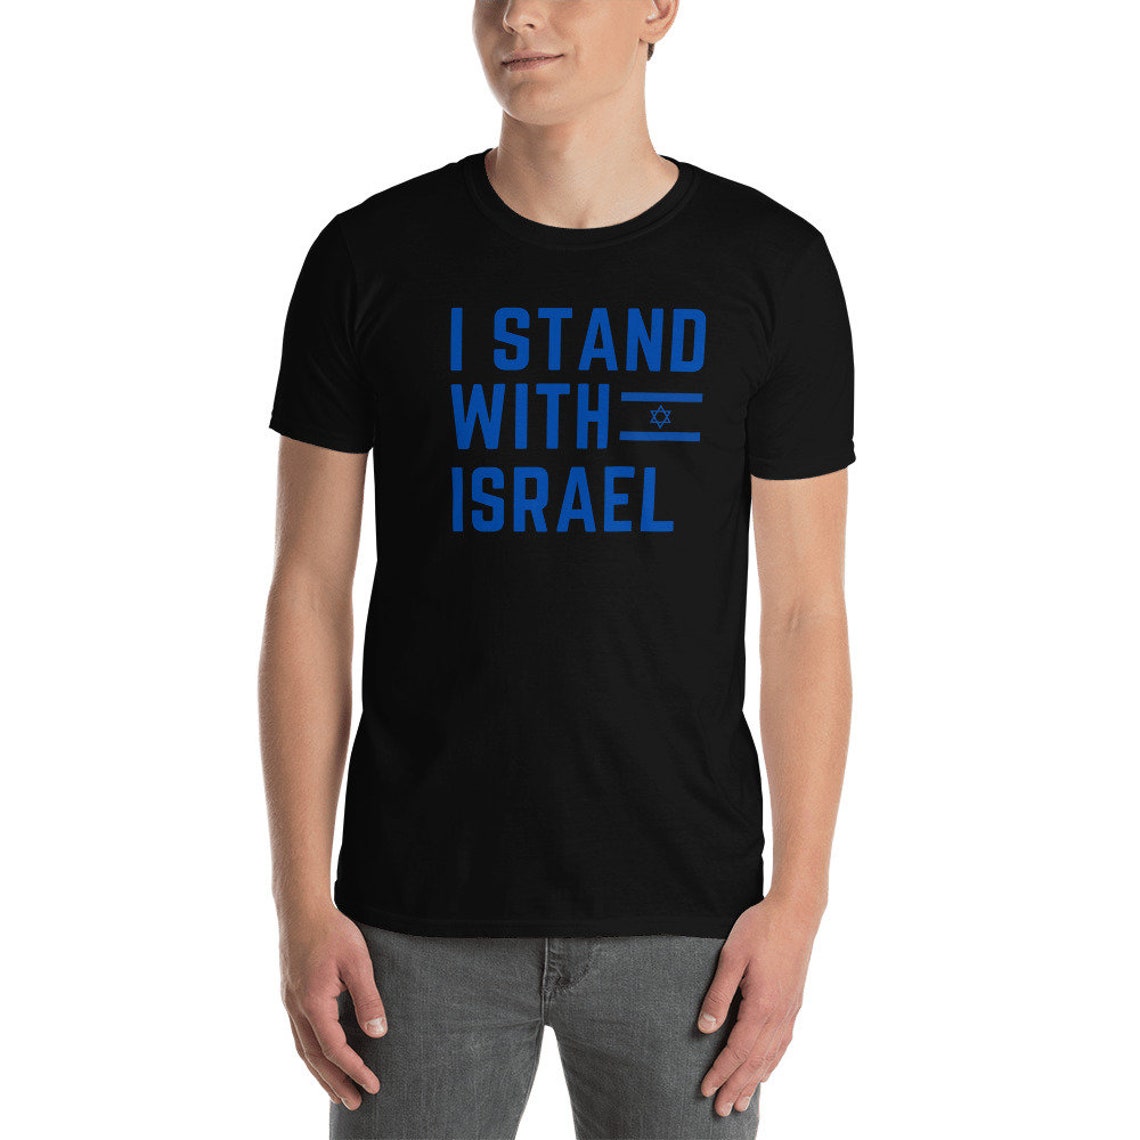 I Stand With Israel Tshirt, Israel Shirts, Support Israel Shirt